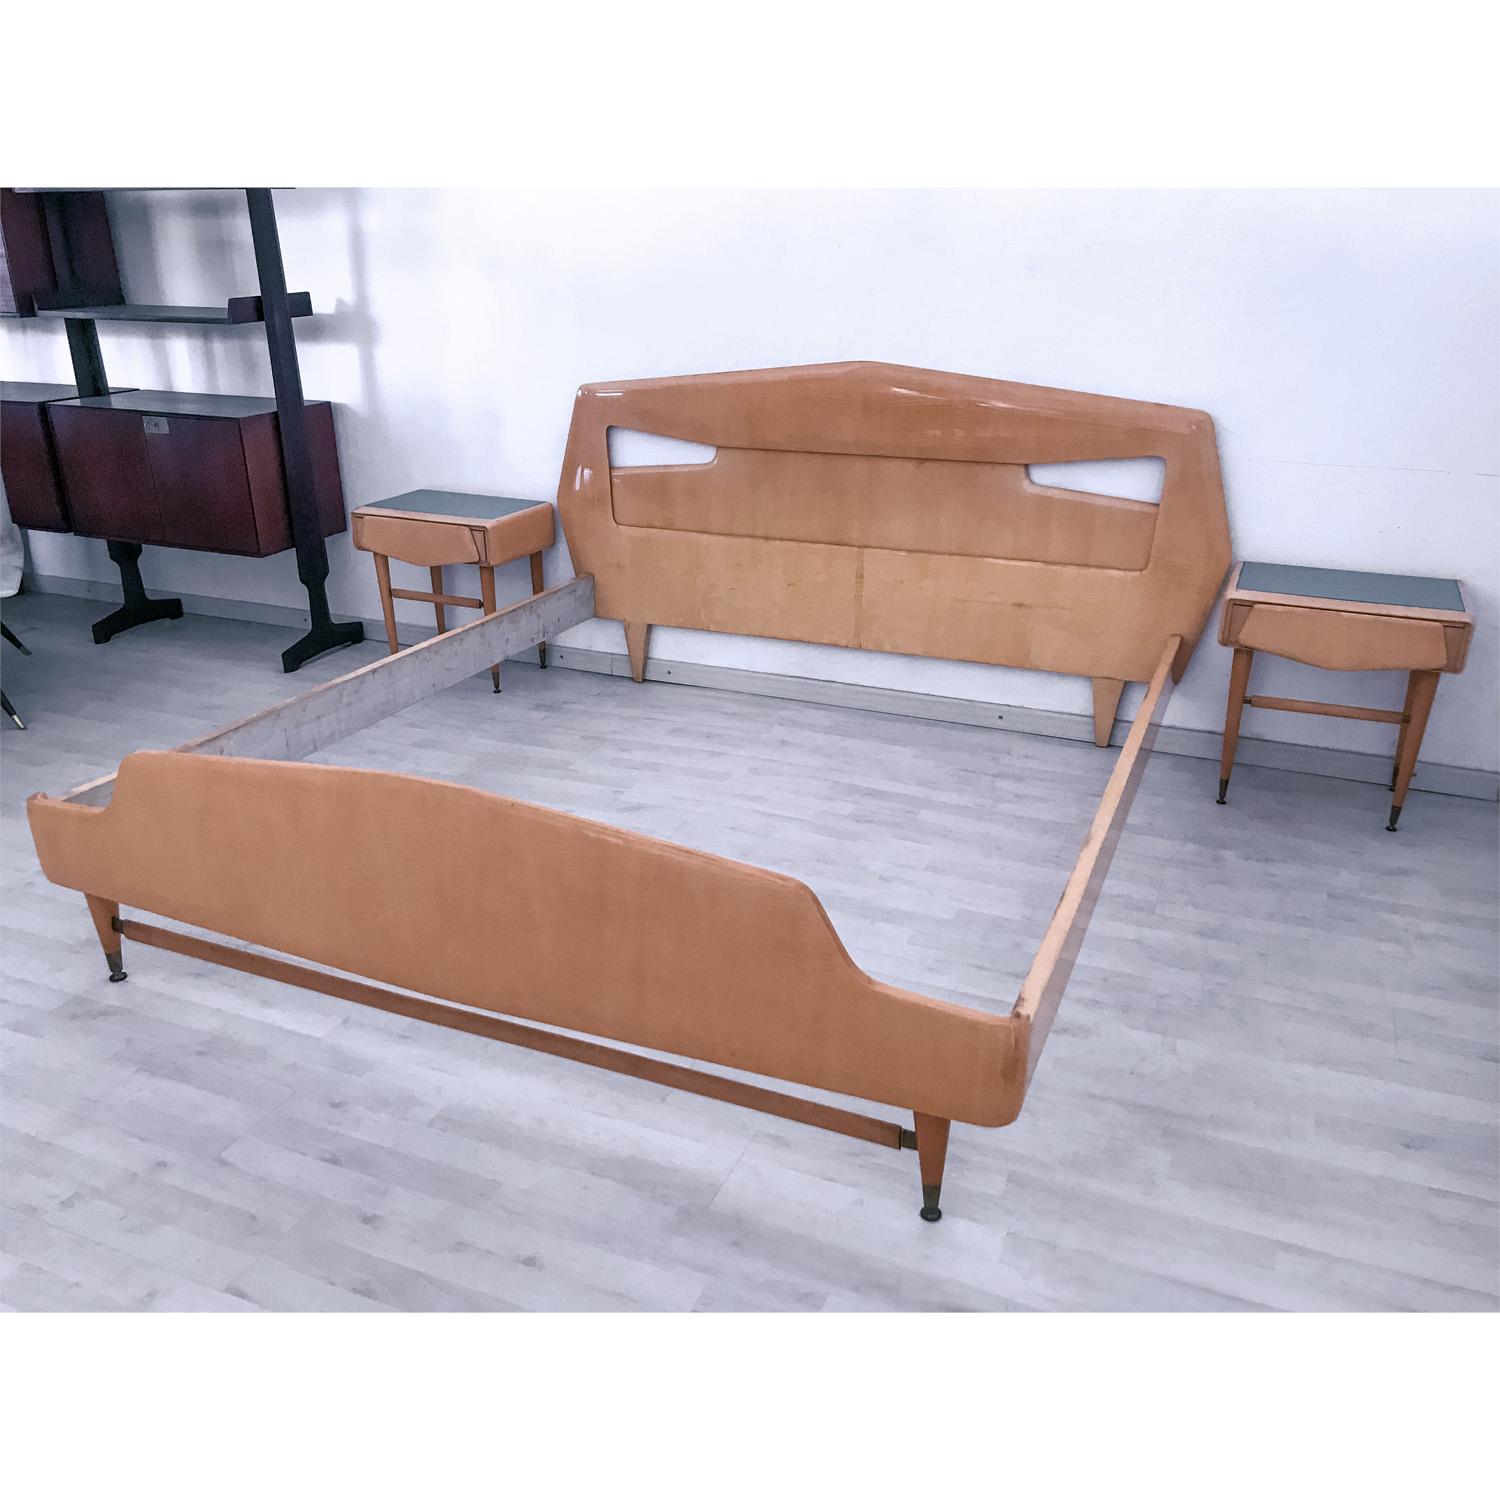 Veneer Italian Mid-Century Bed with Bedside Tables attr. to Silvio Cavatorta, 1950s